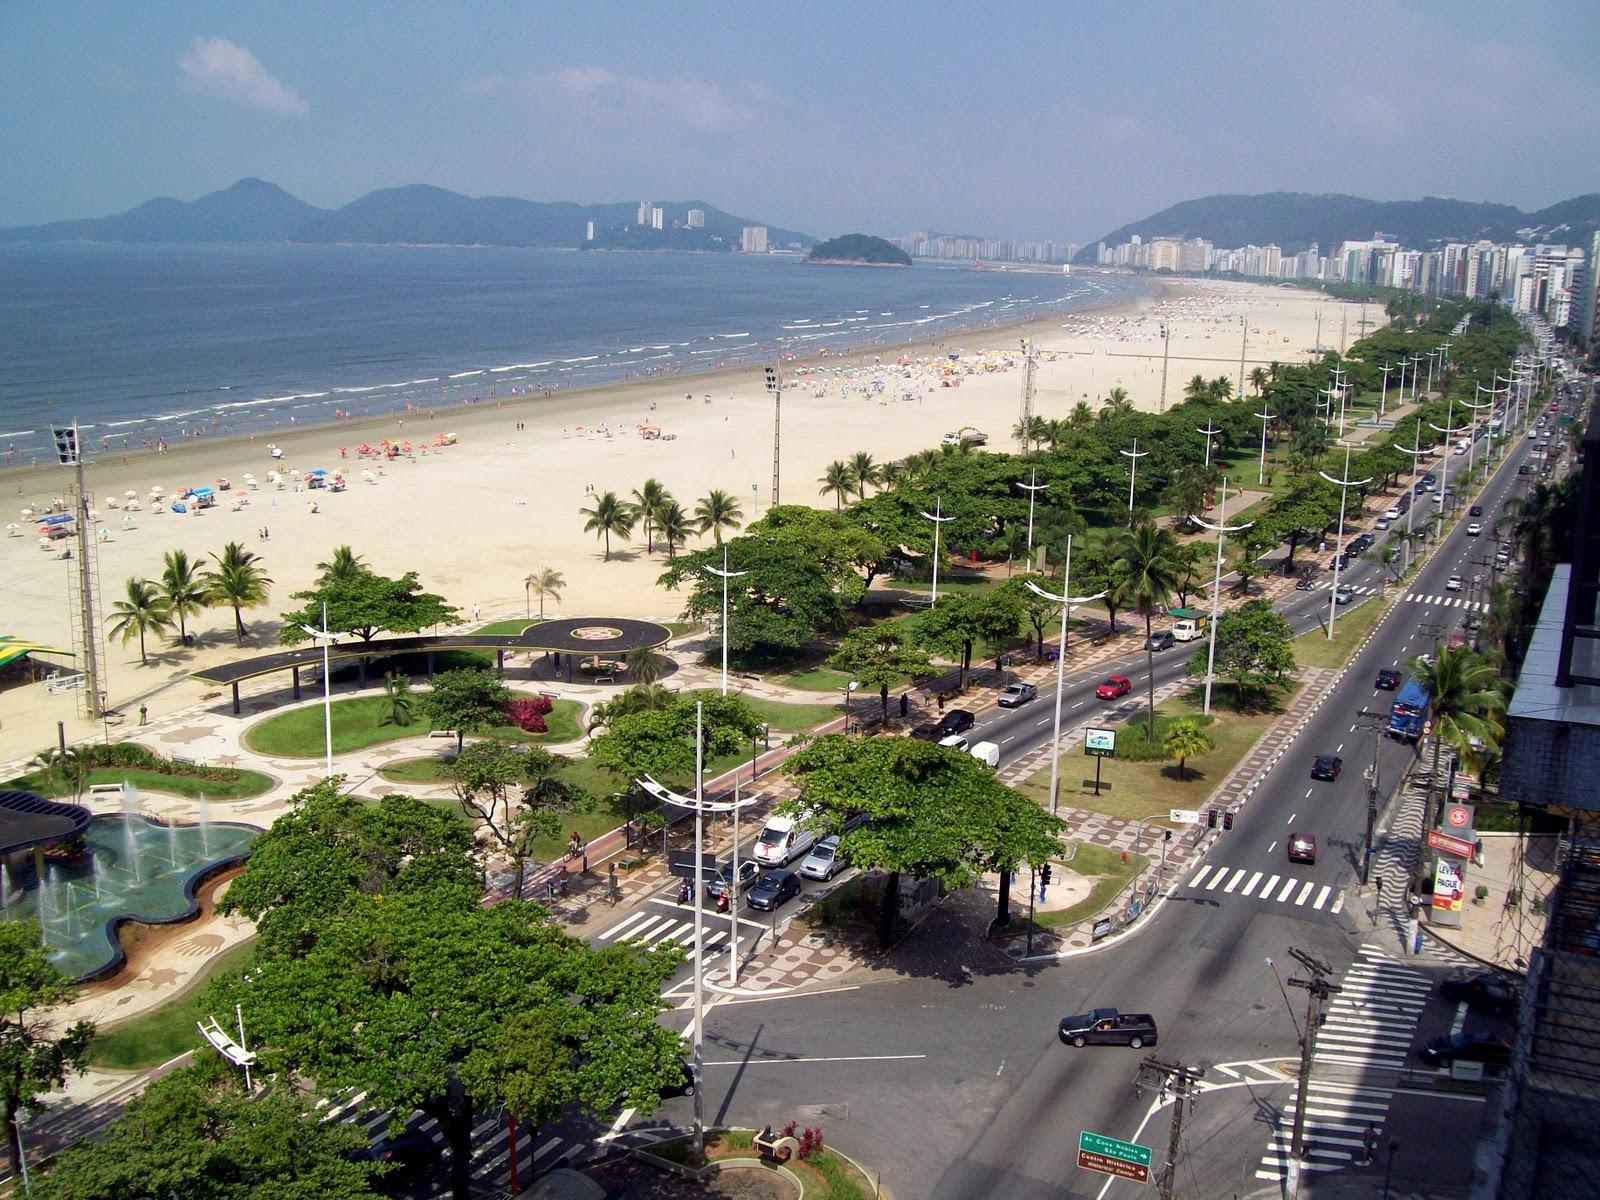 Santos, the longest beach garden in the world